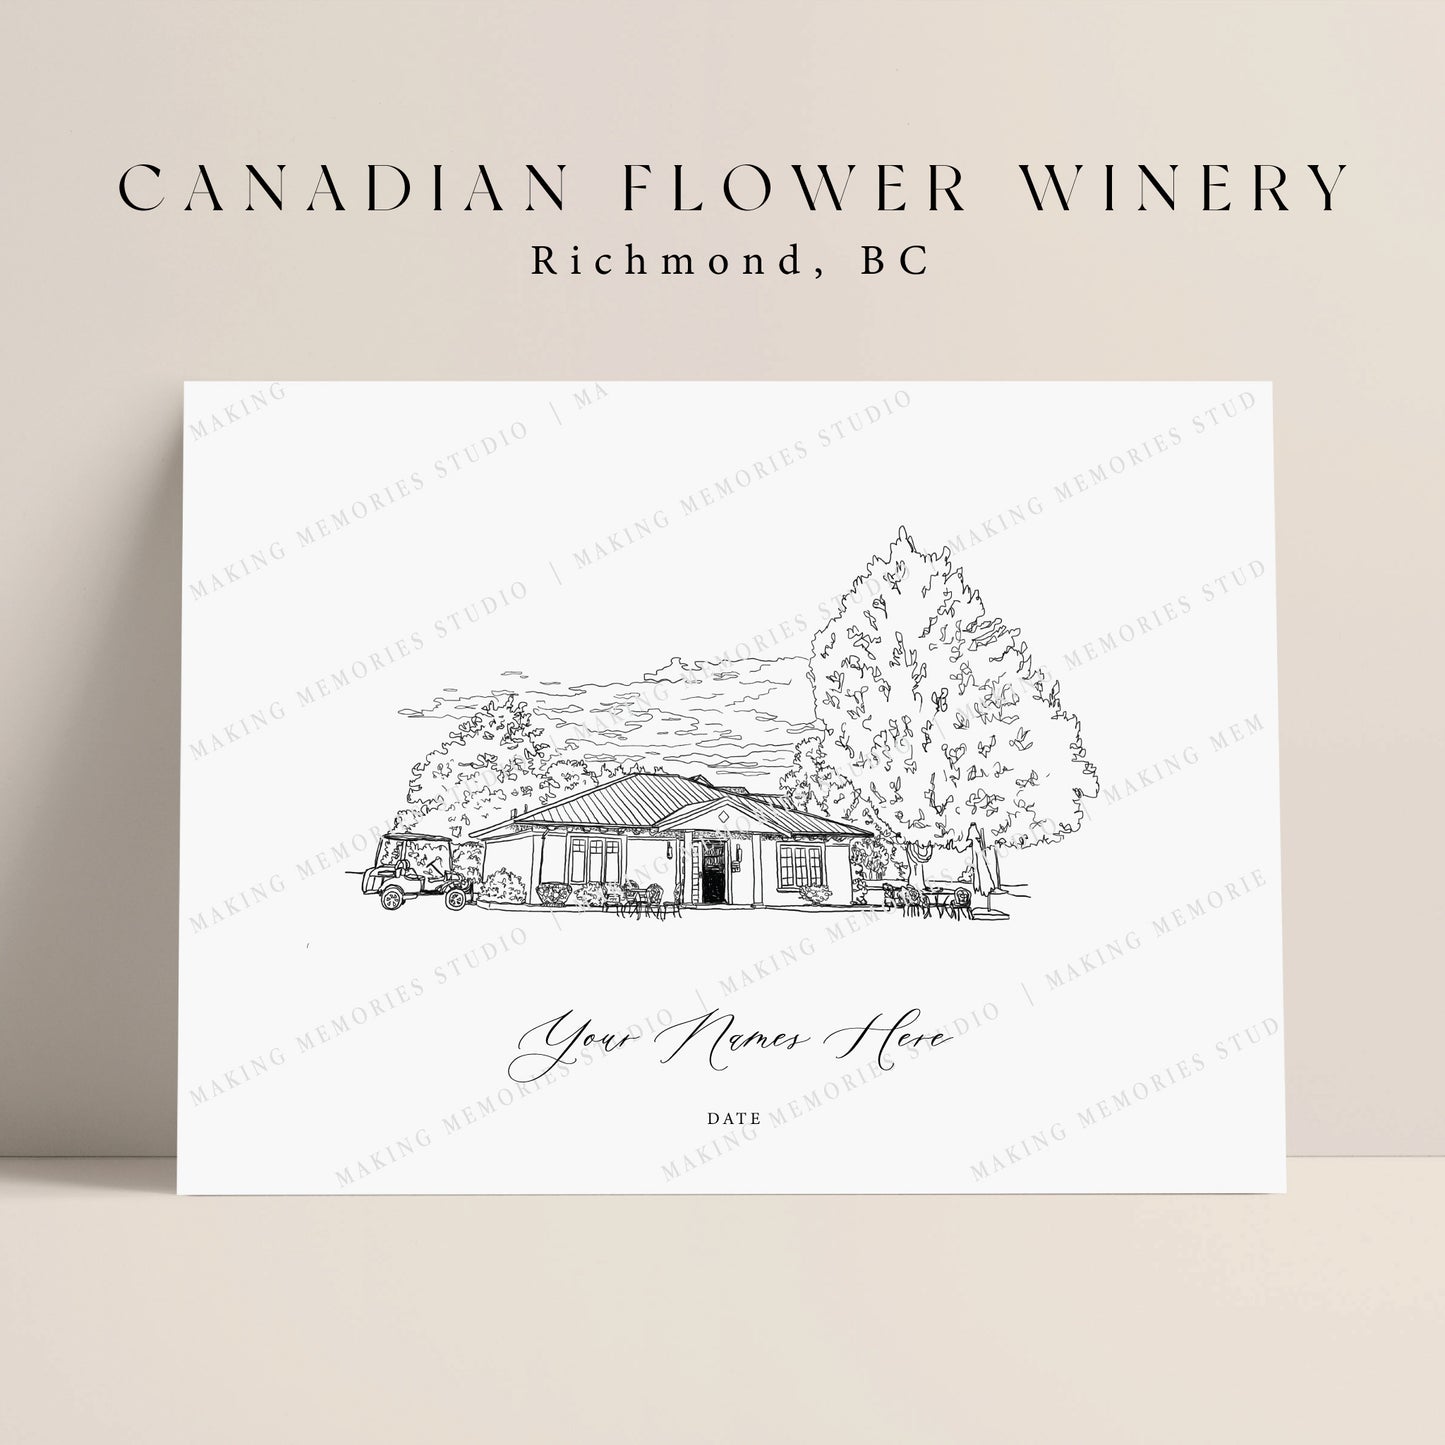 Canadian Flower Winery